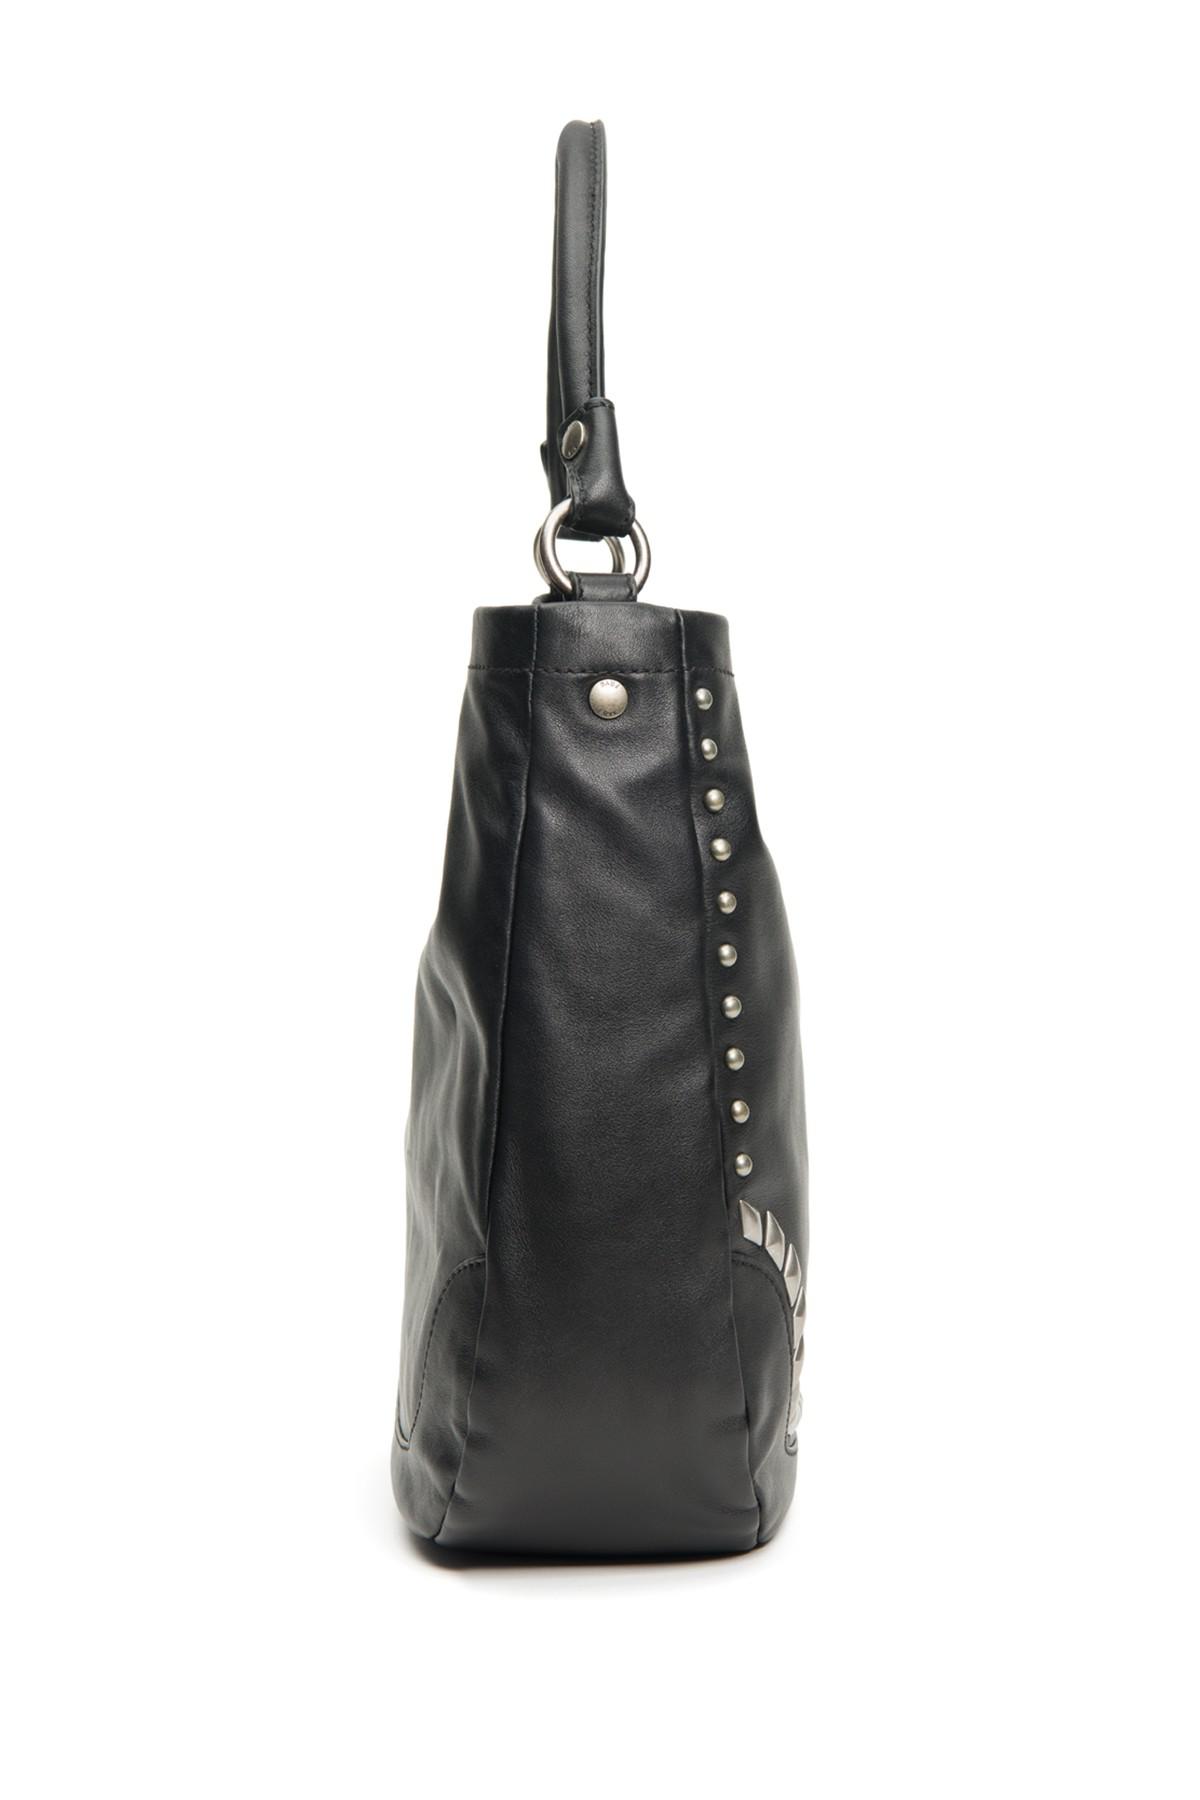 Frye Melissa Diamond Studded Leather Crossbody Bag in Black - Lyst